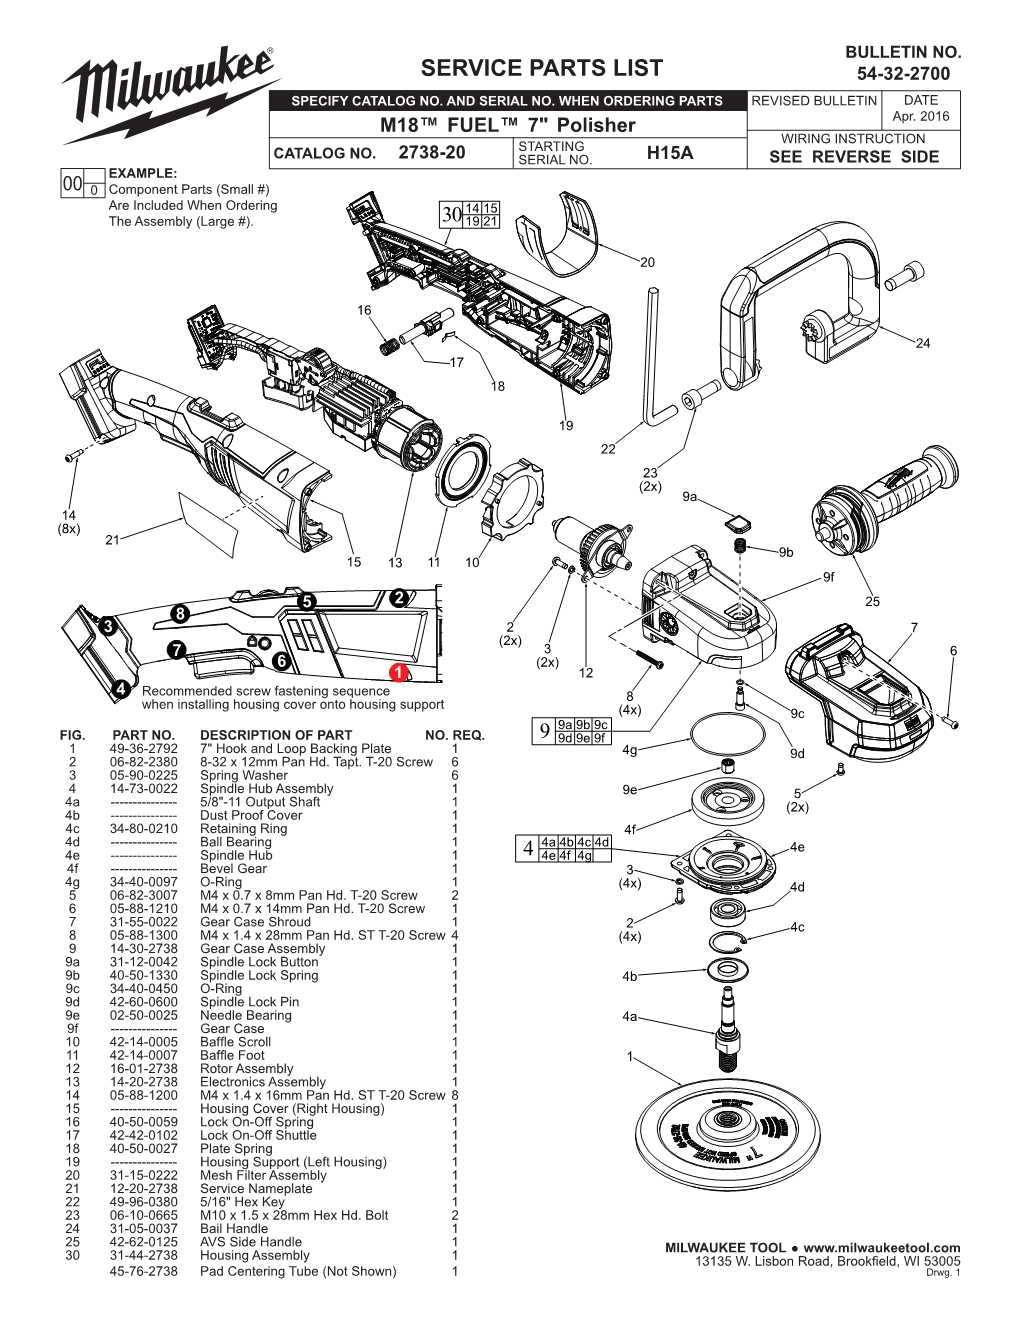 Service Parts List 54-32-2700 Specify Catalog No